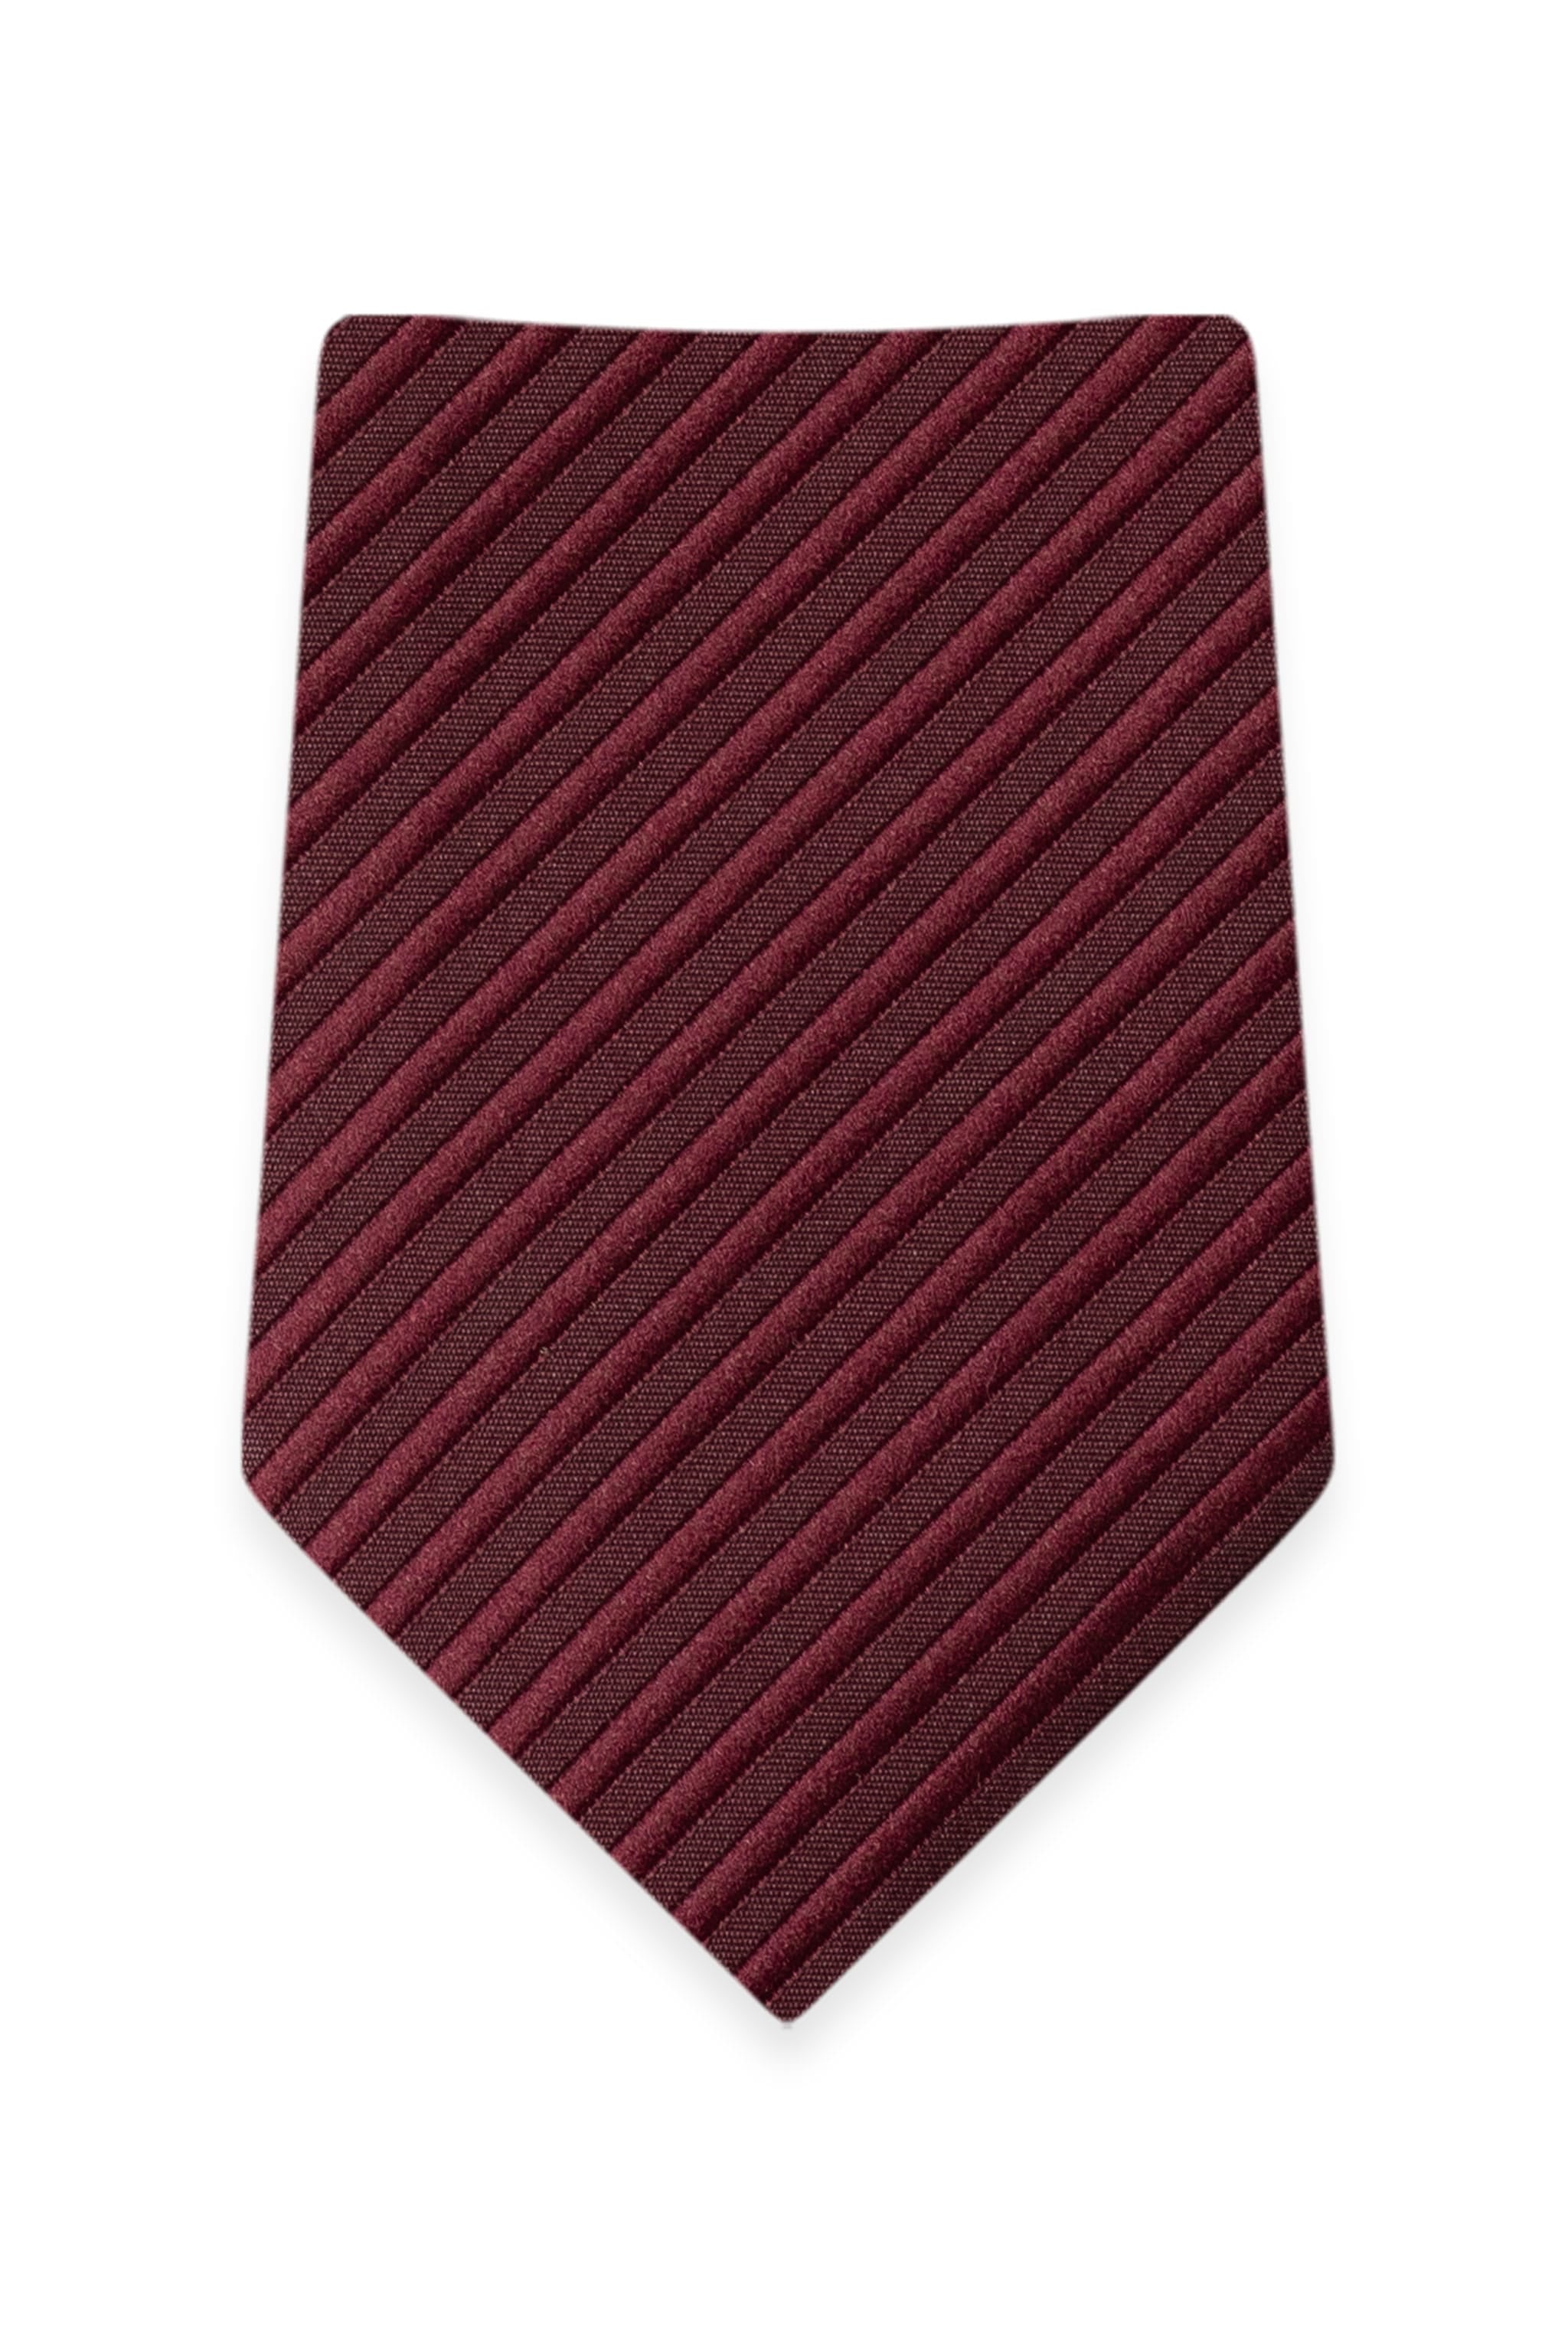 Striped Wine Self-Tie Windsor Tie